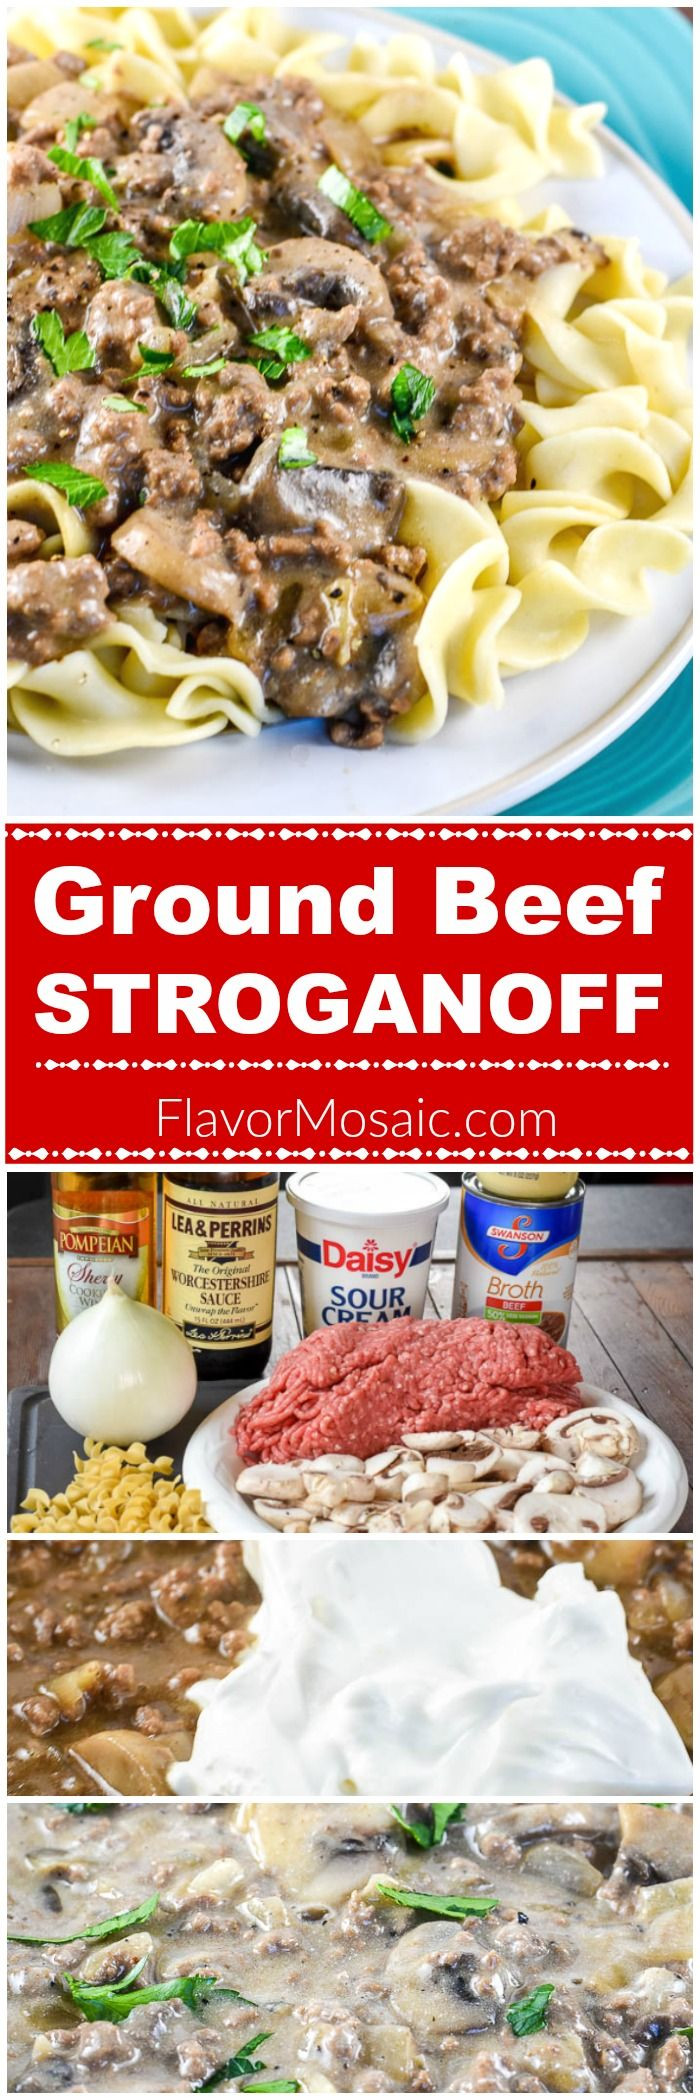 Ground Beef Stroganoff Cream Of Mushroom
 This easy 30 minute Ground Beef Stroganoff recipe omits